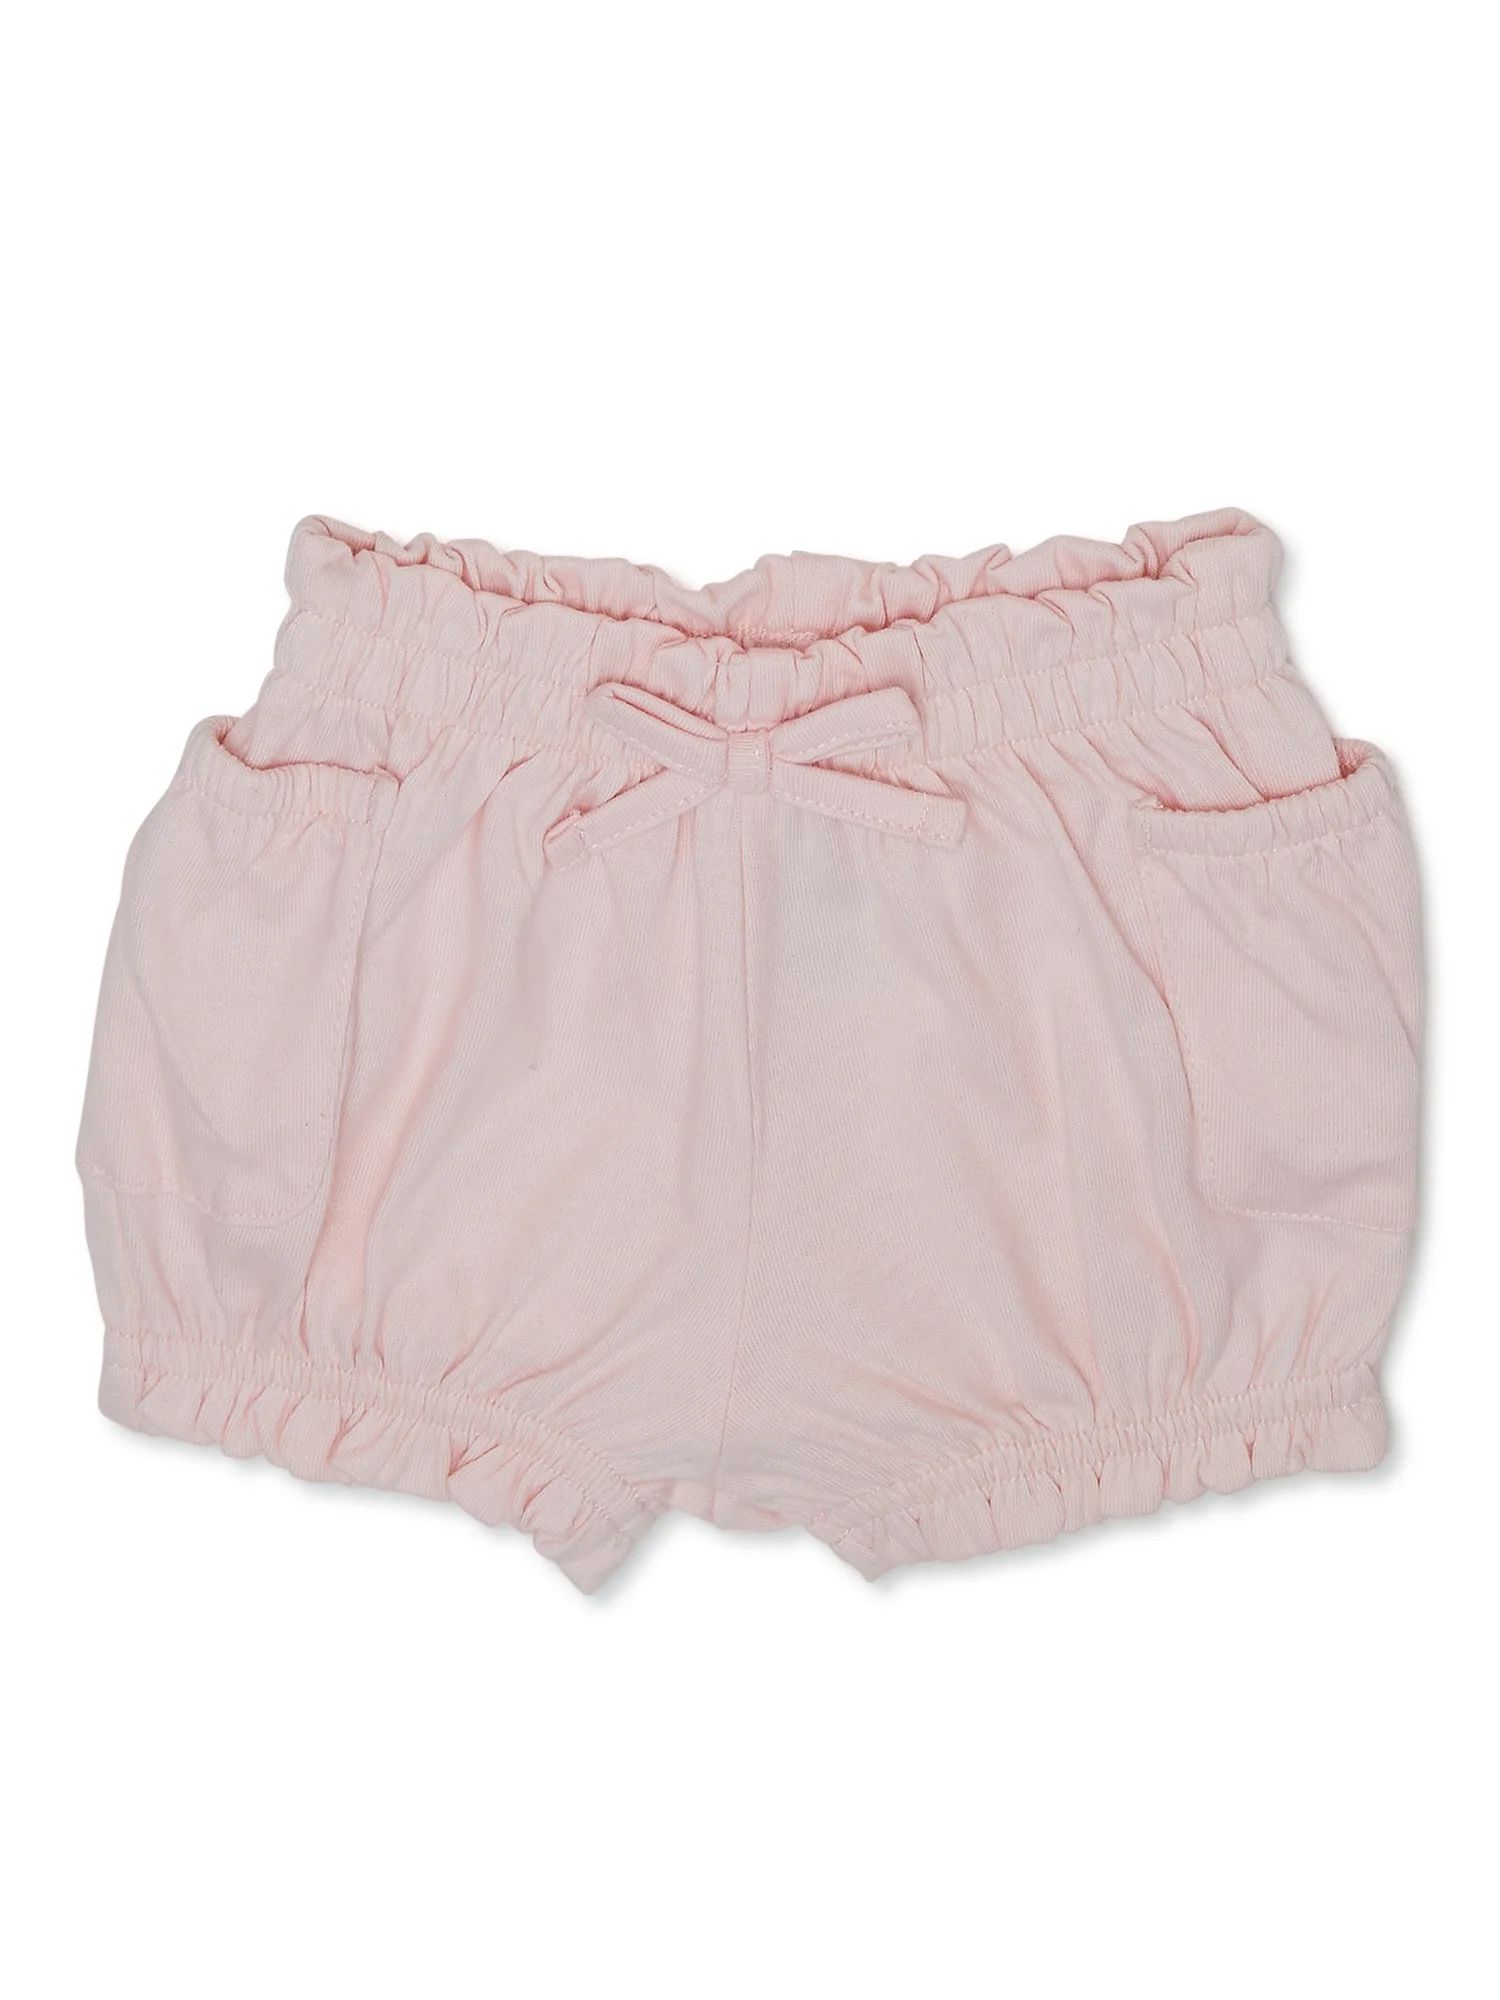 Garanimals Baby Girl Solid Bubble Shorts, Sizes 0-24 Months | Walmart (US)